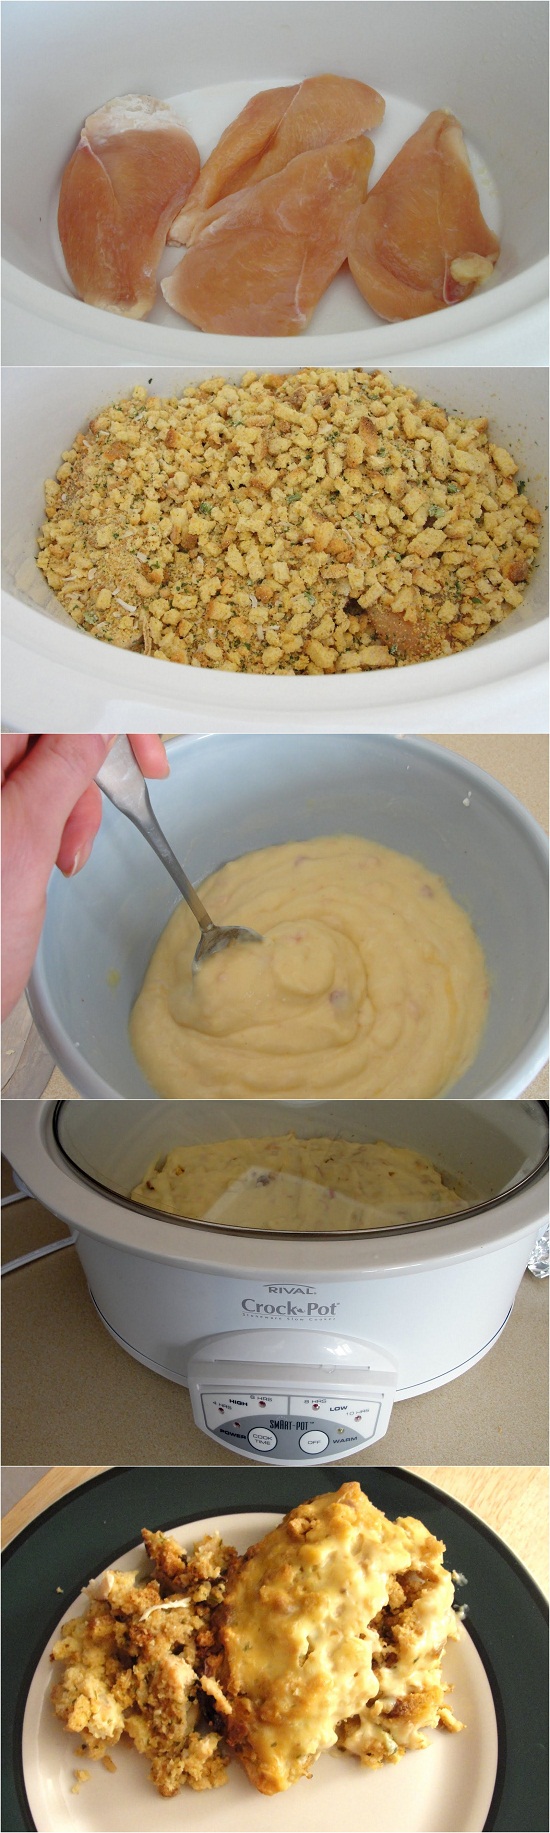 Crockpot-Chicken-and-Stuffing-Recipe